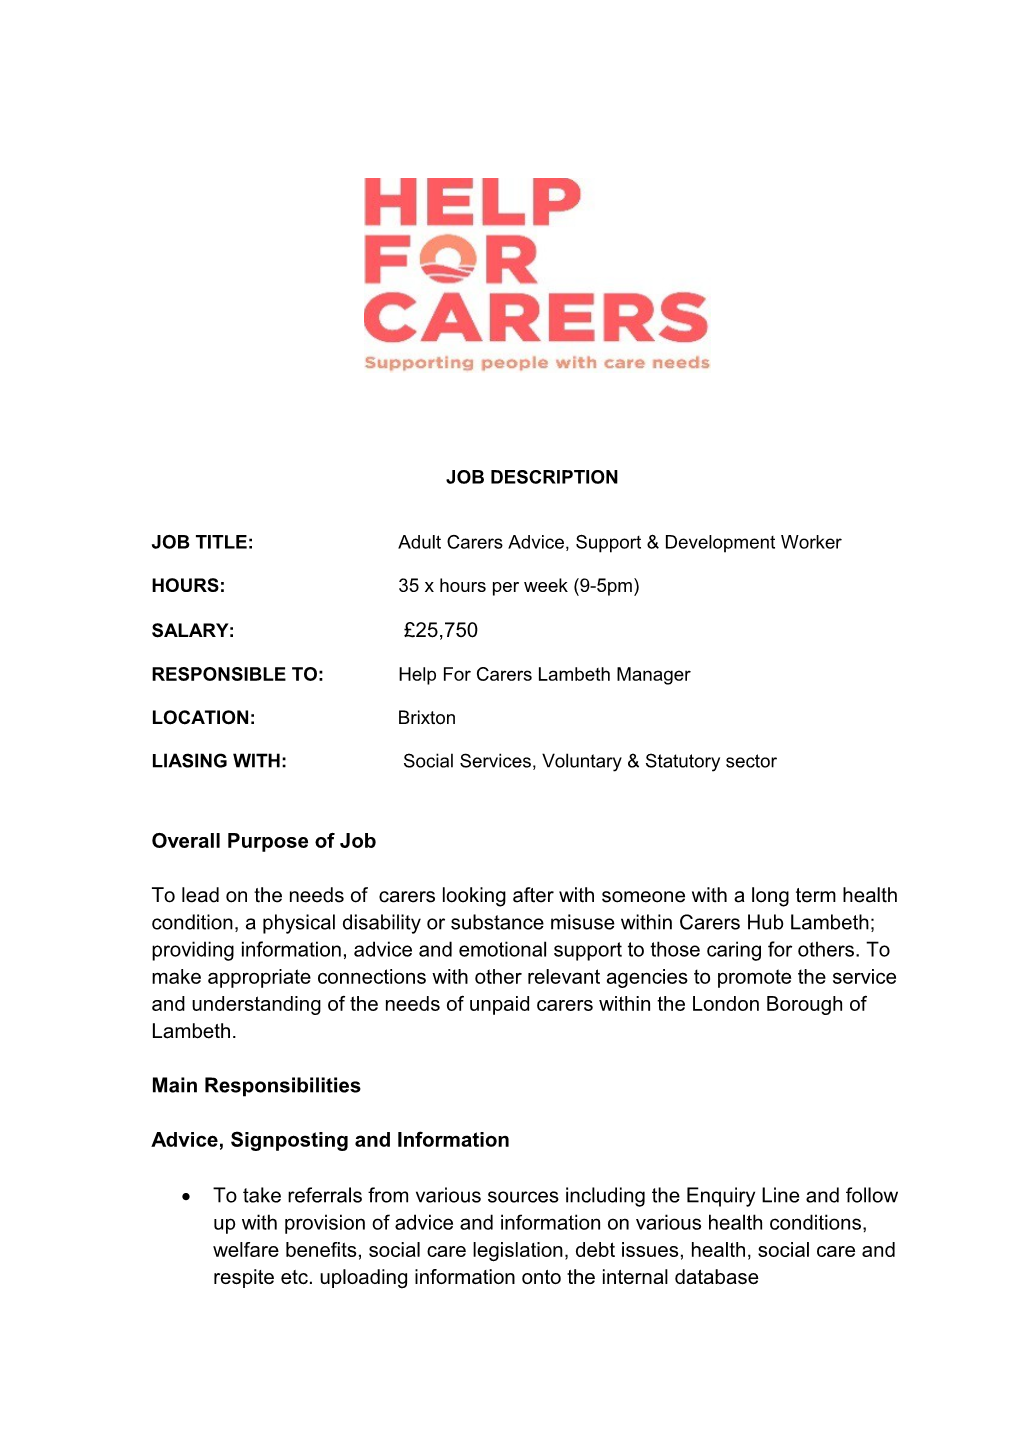 JOB TITLE: Adult Carers Advice, Support & Development Worker